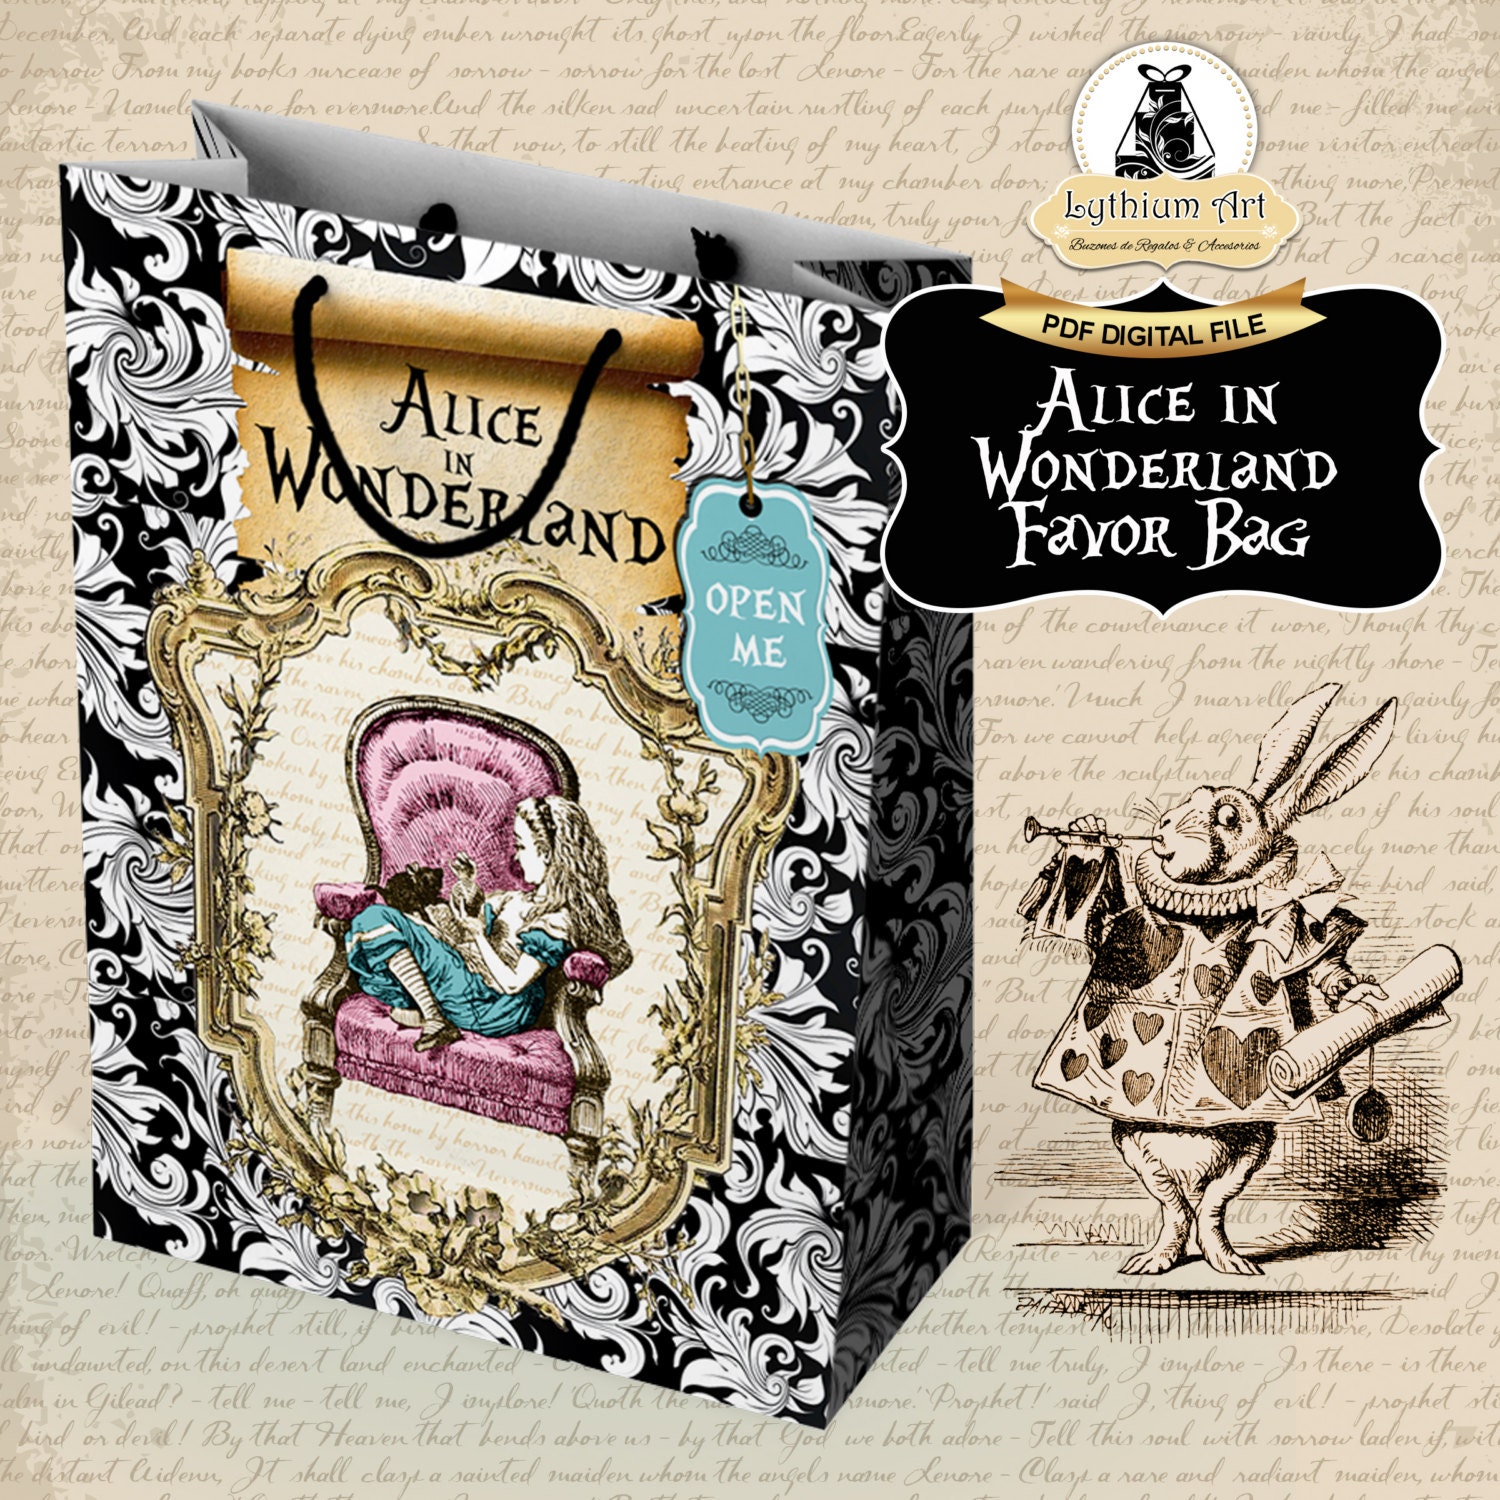 Alice in Wonderland Favor Bag Alice in Wonderland by LythiumArt